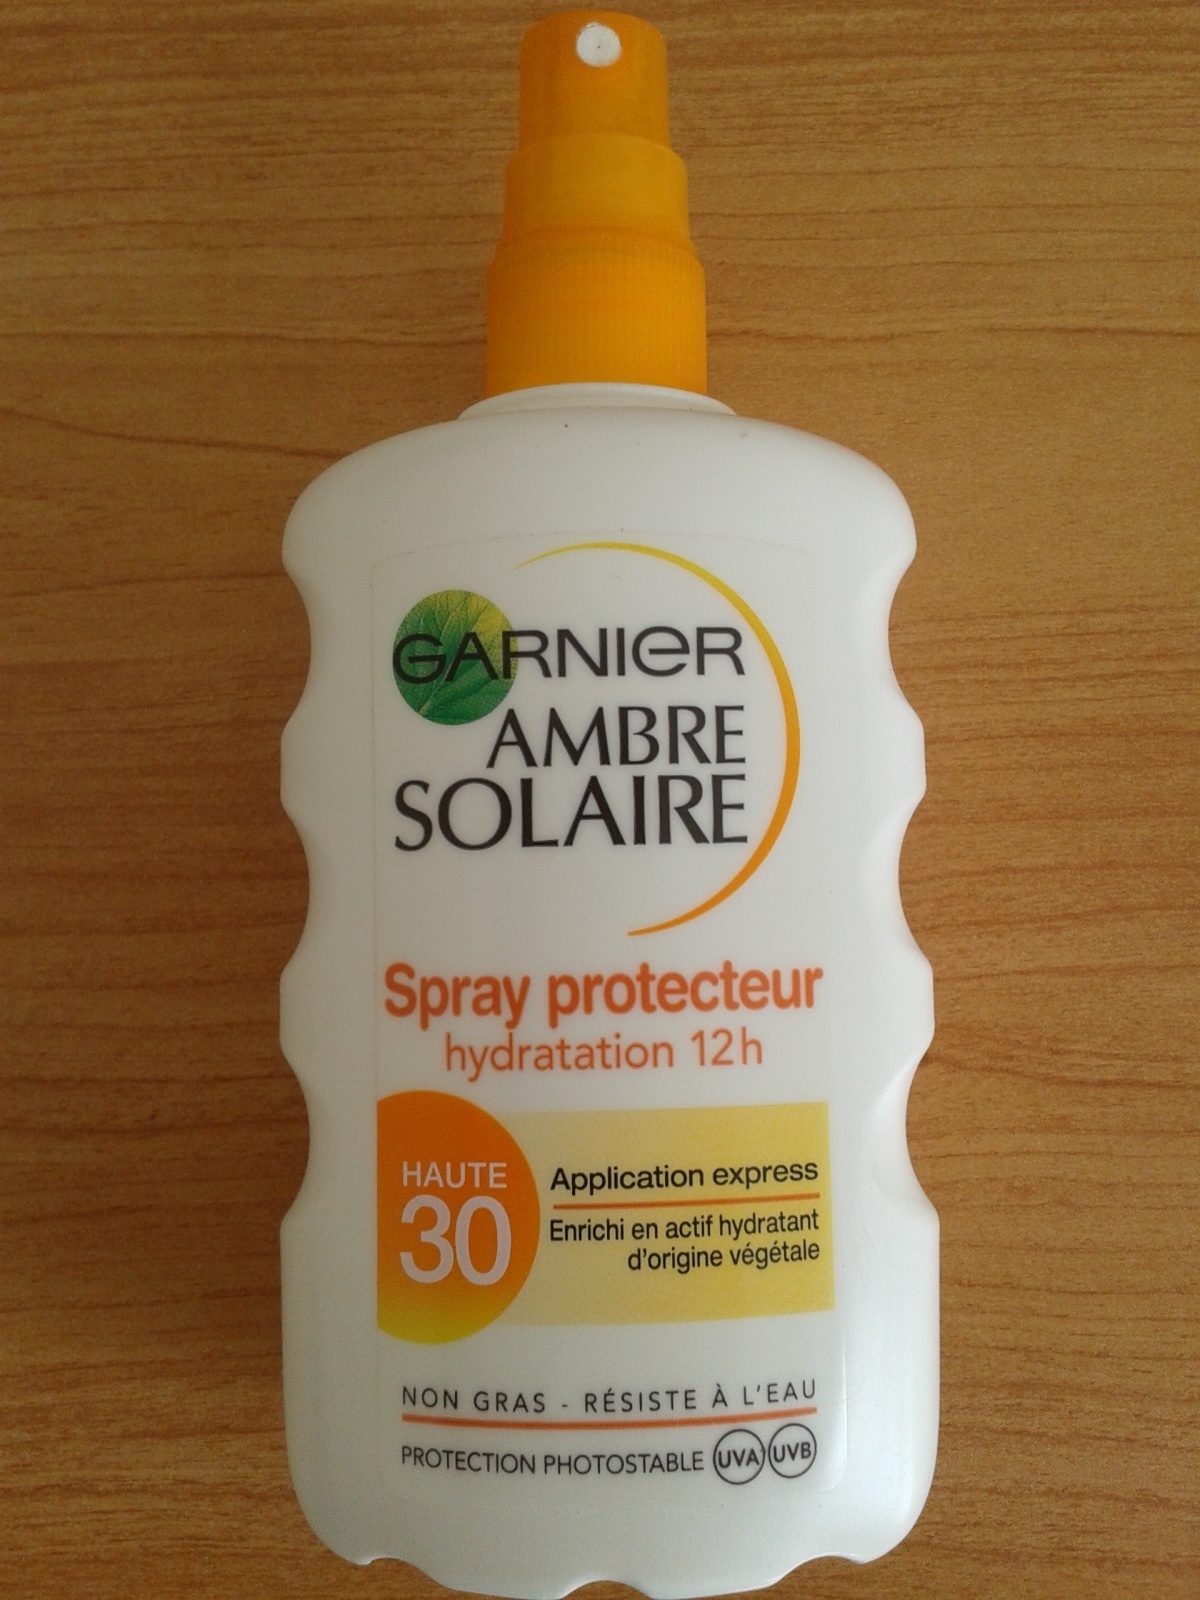 Ambre solaire Spray Protecteur hydratation 12H - Produto - fr